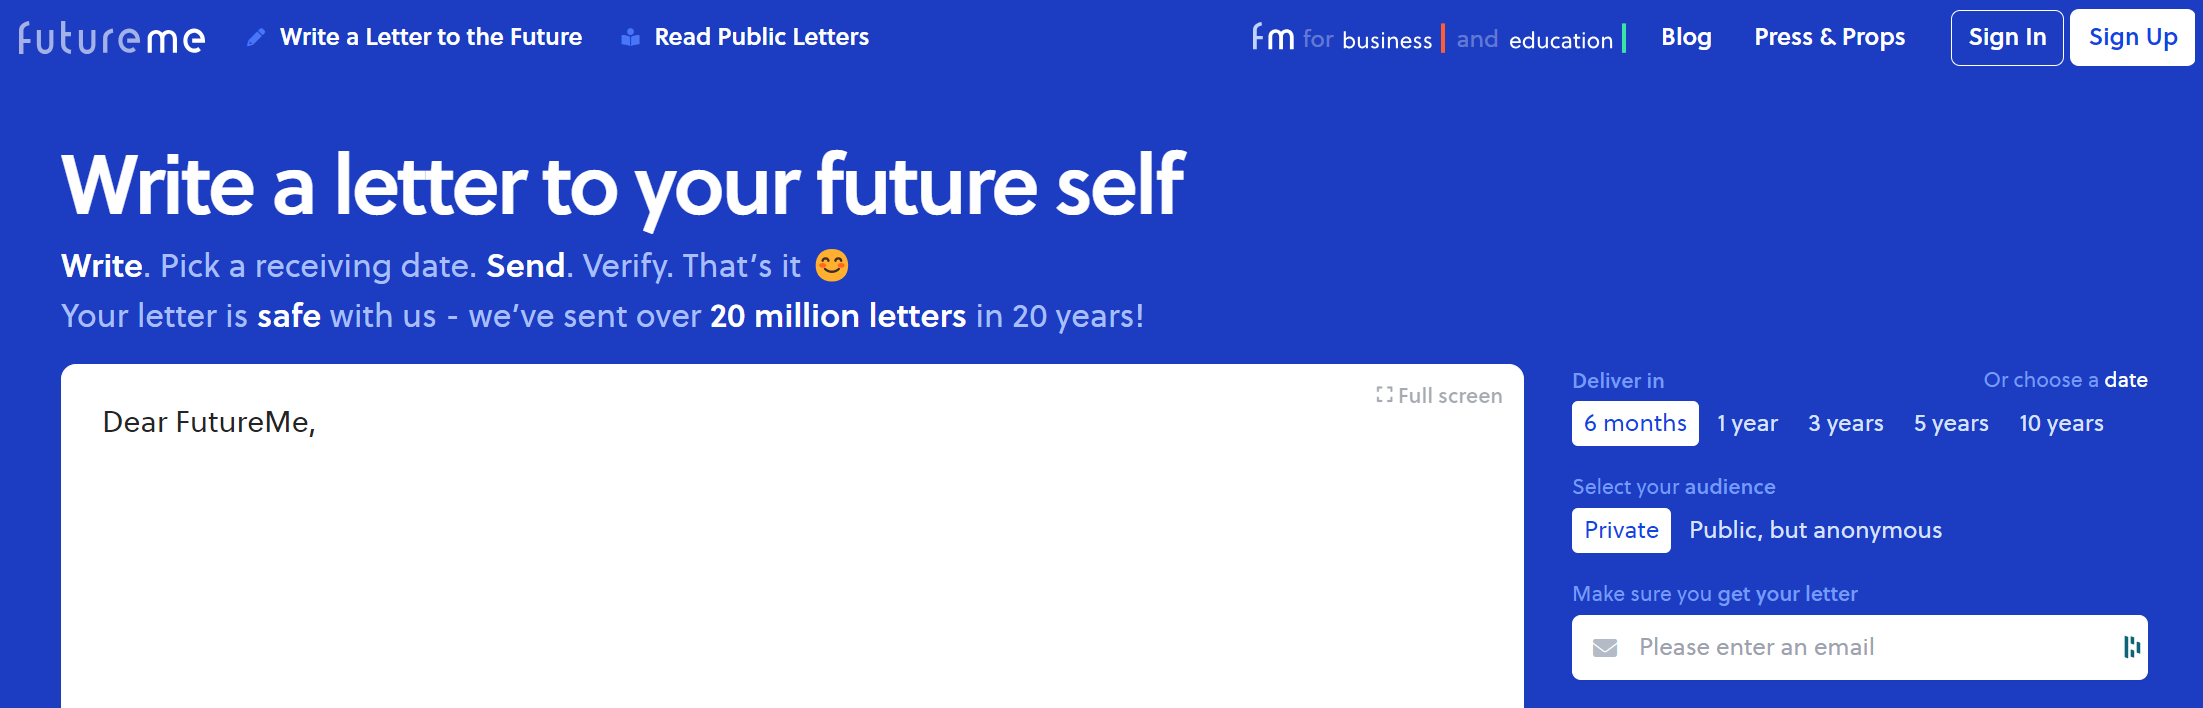 FutureMe dot Org - Write a Letter to Your Future Self